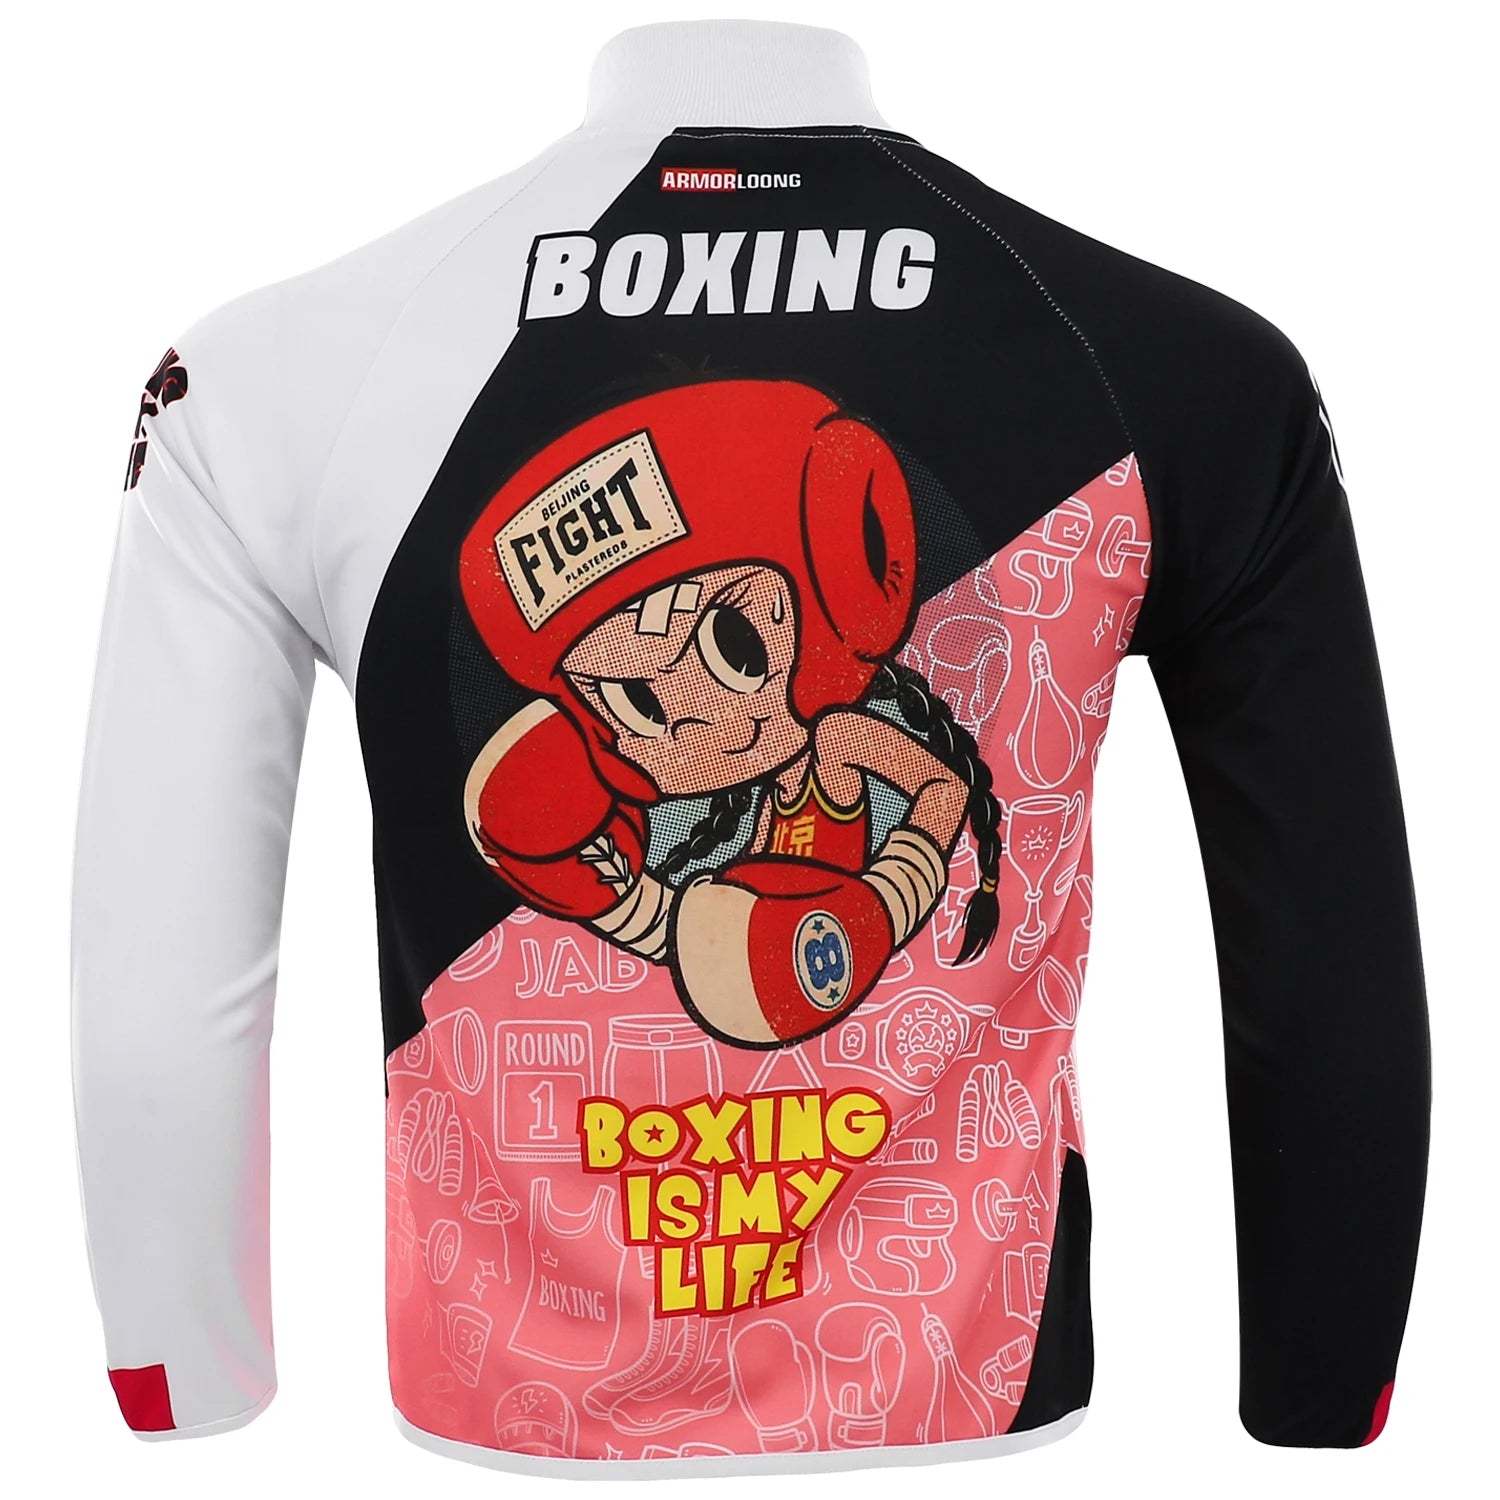 mma-boxing-girls-training-sweater-trousers-coat-muay-thai-camping-fishing-cycling-judo-comprehensive-fighting-skills